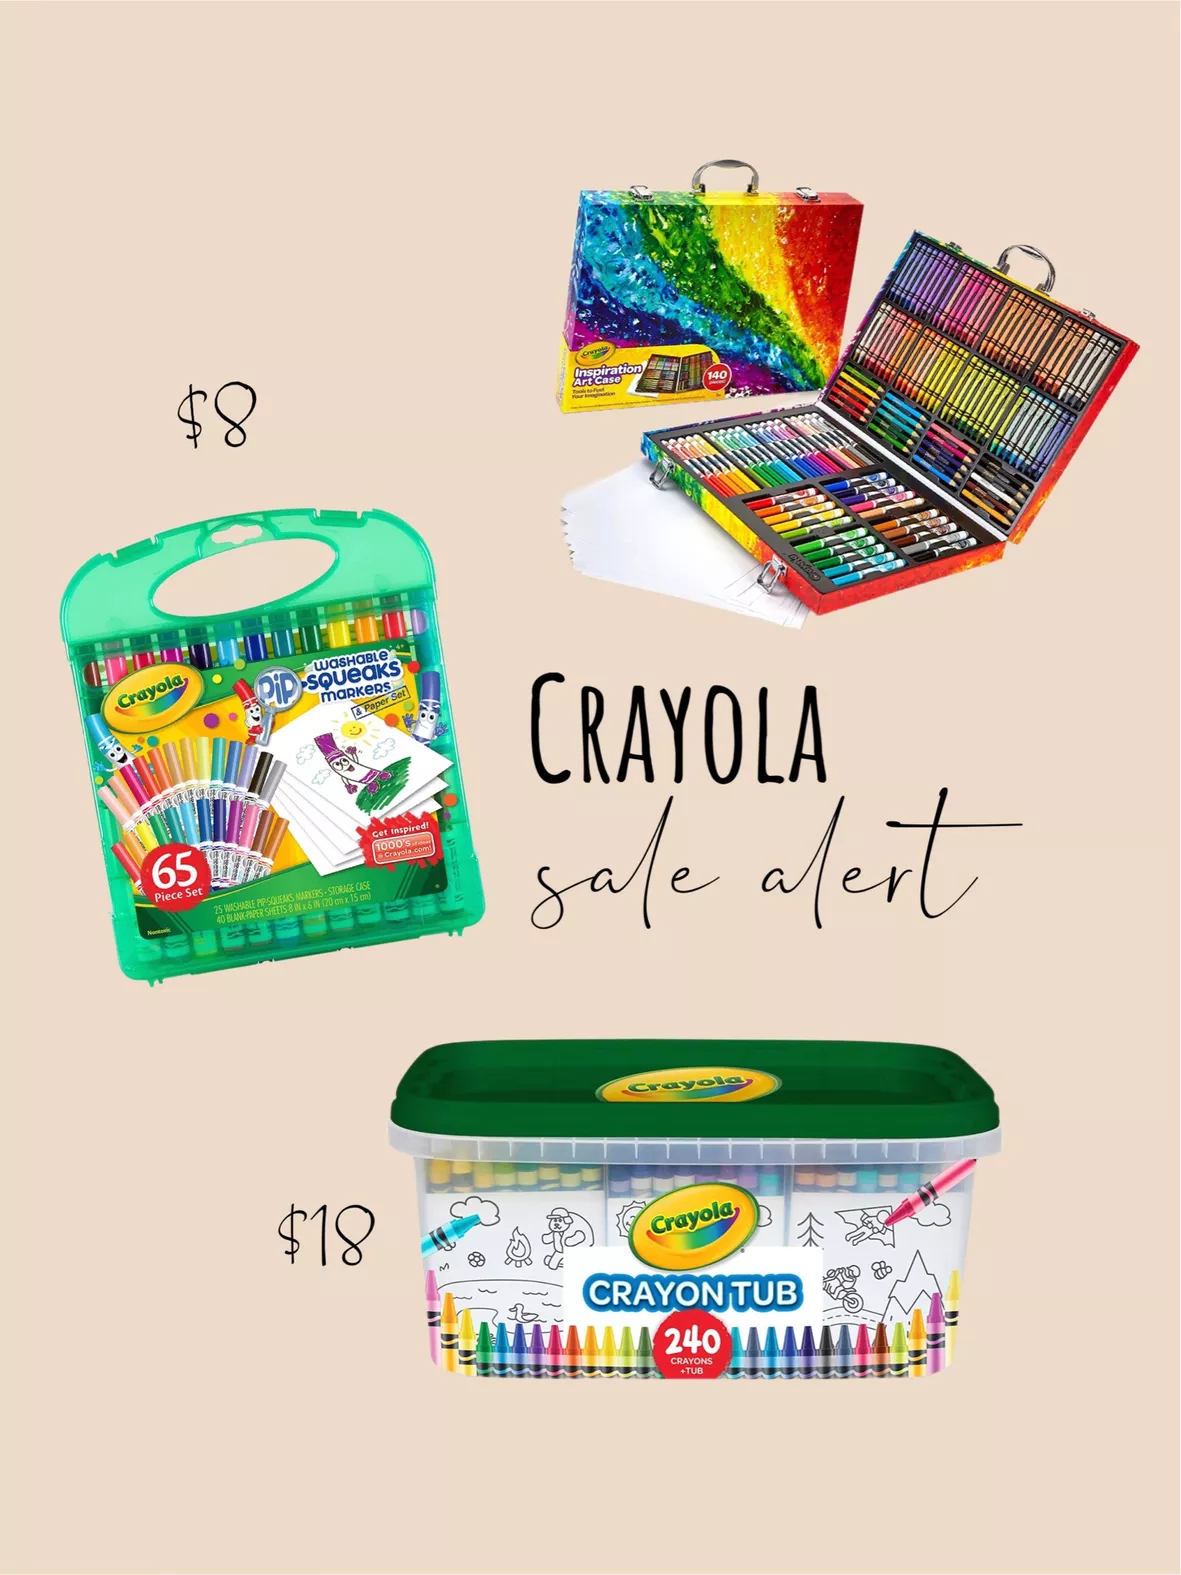 Inspiration Art Case Crayola Coloring Set for Kids, Crayola Kids